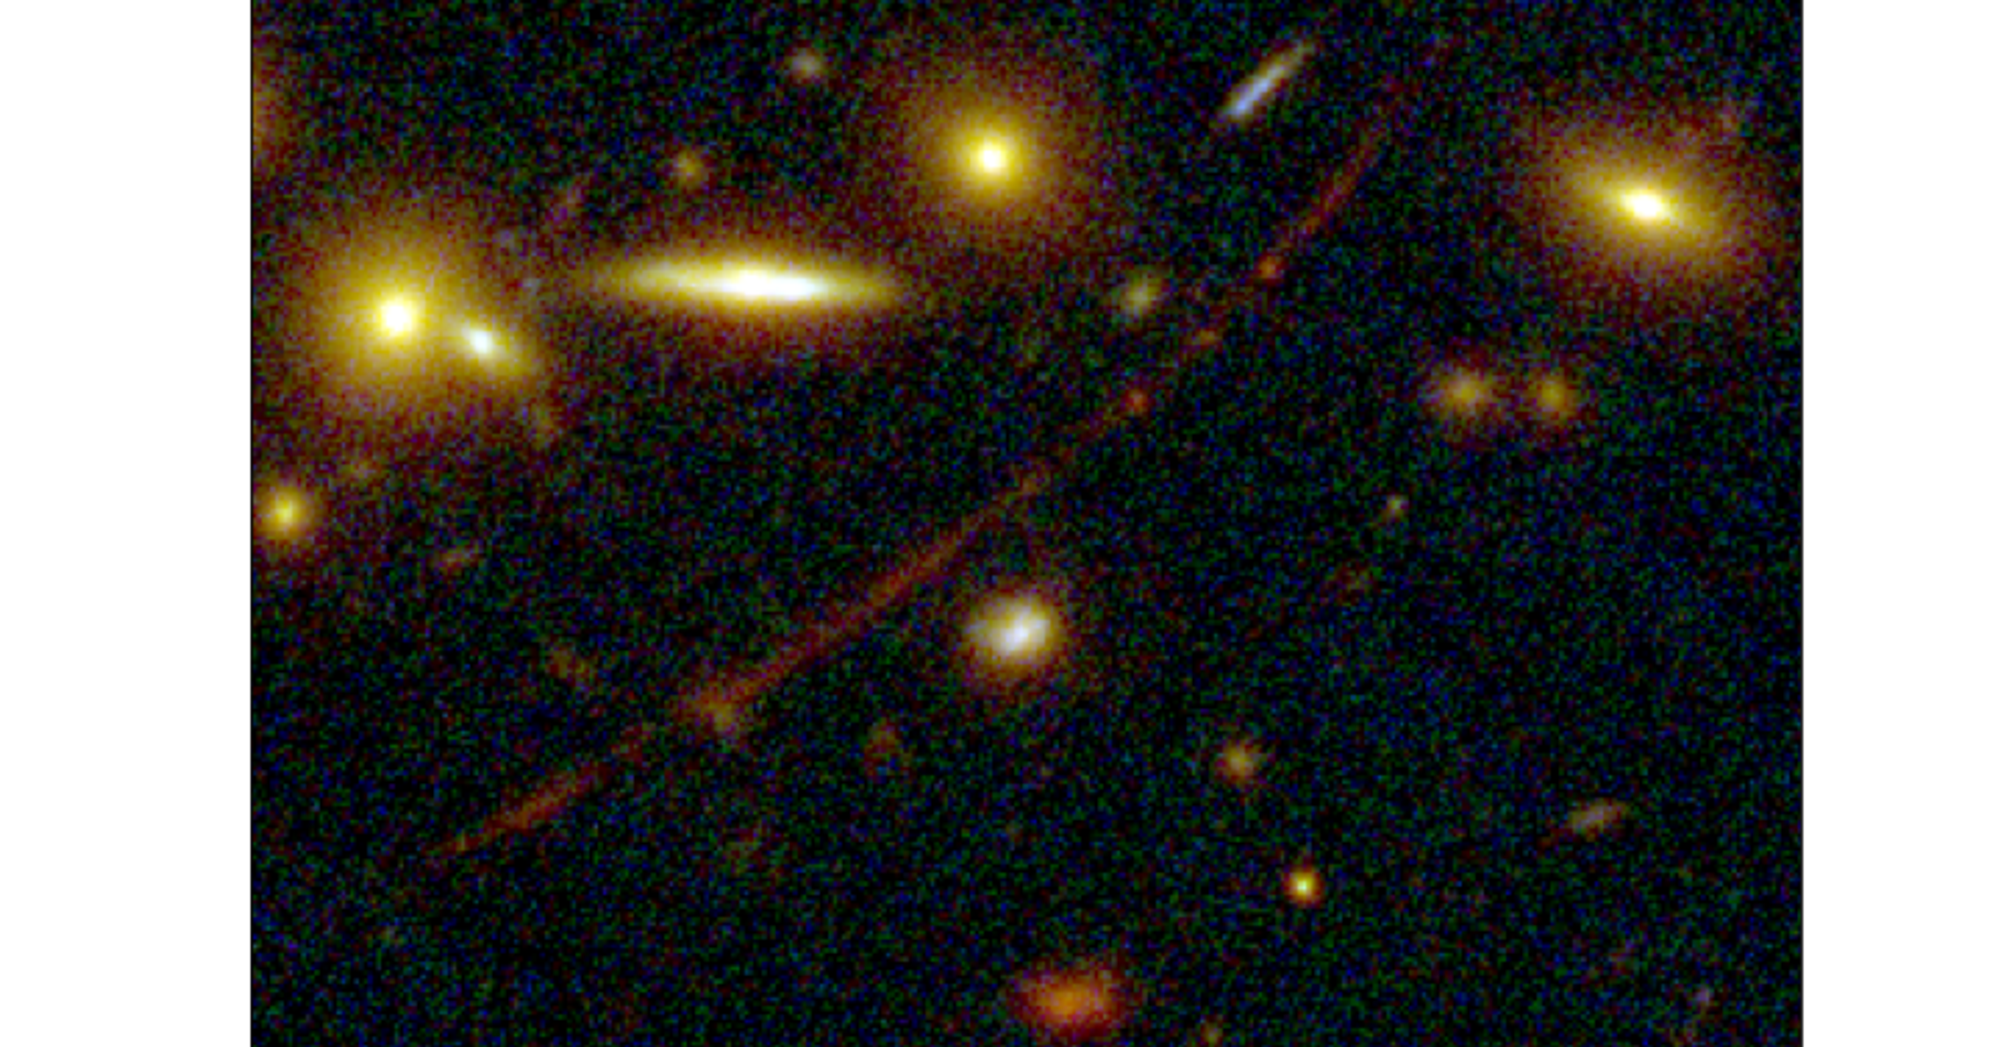 https://www.theverge.com/2022/3/30/23002980/earendel-hubble-most-distant-star-gravitational-lensing-jwst